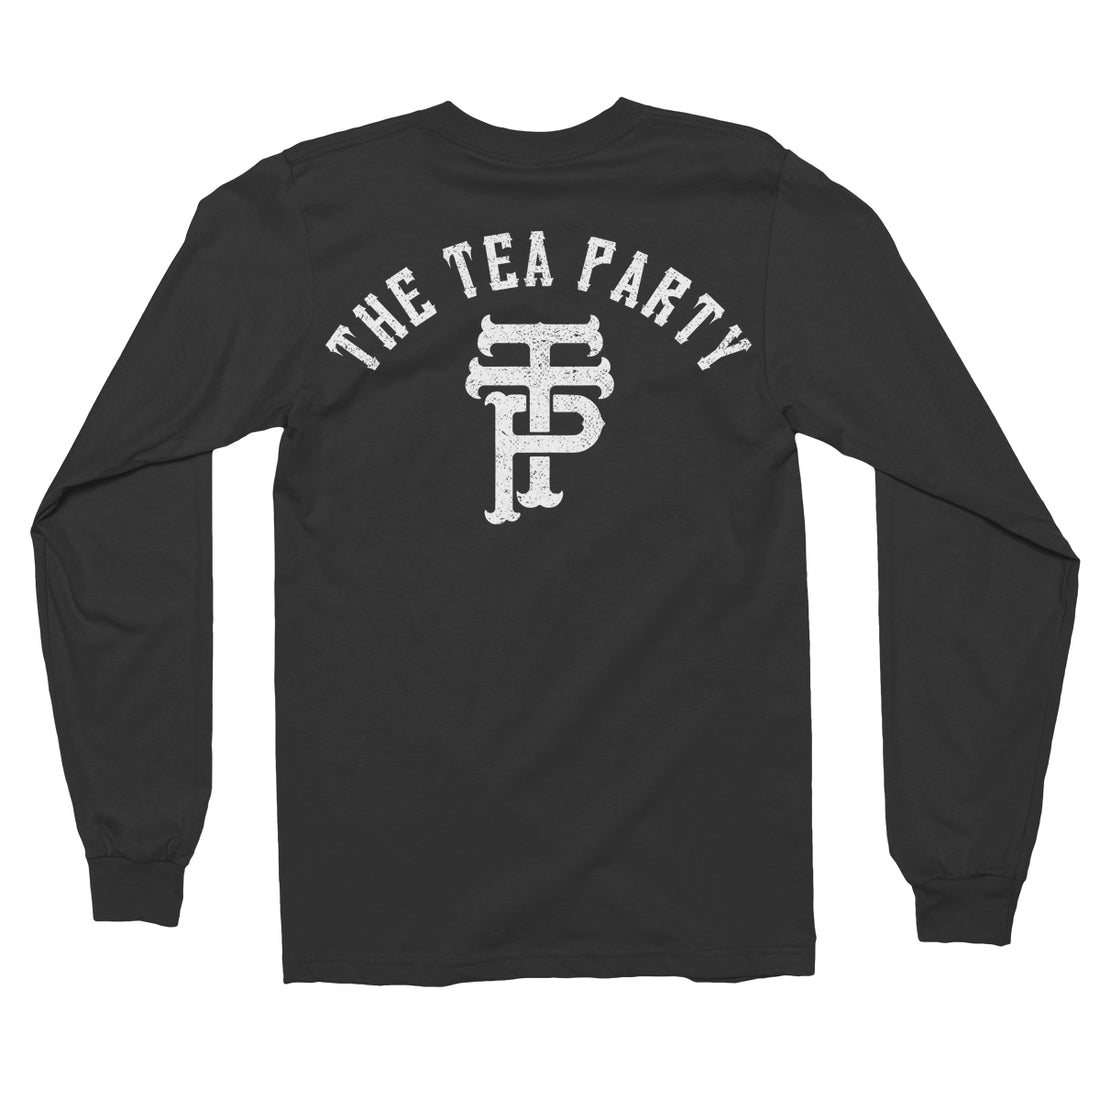 The Tea Party - TTP - Black Long Sleeve Shirt